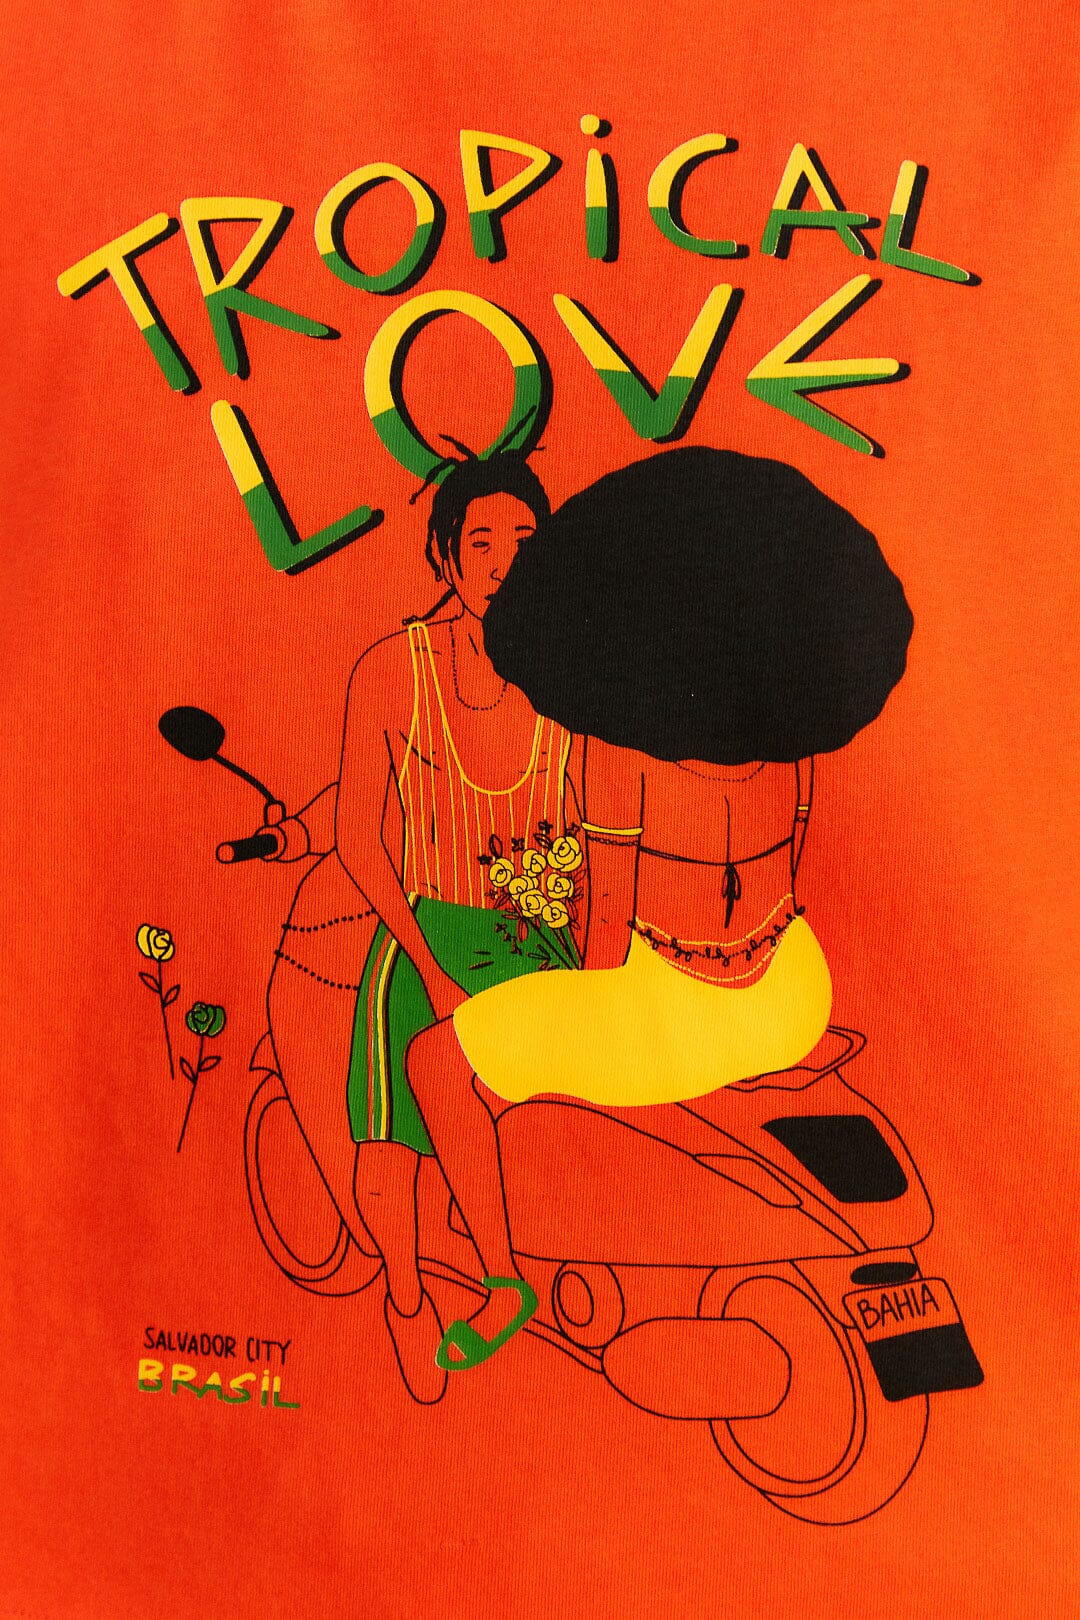 Orange Tropical Love Organic Cotton T-Shirt